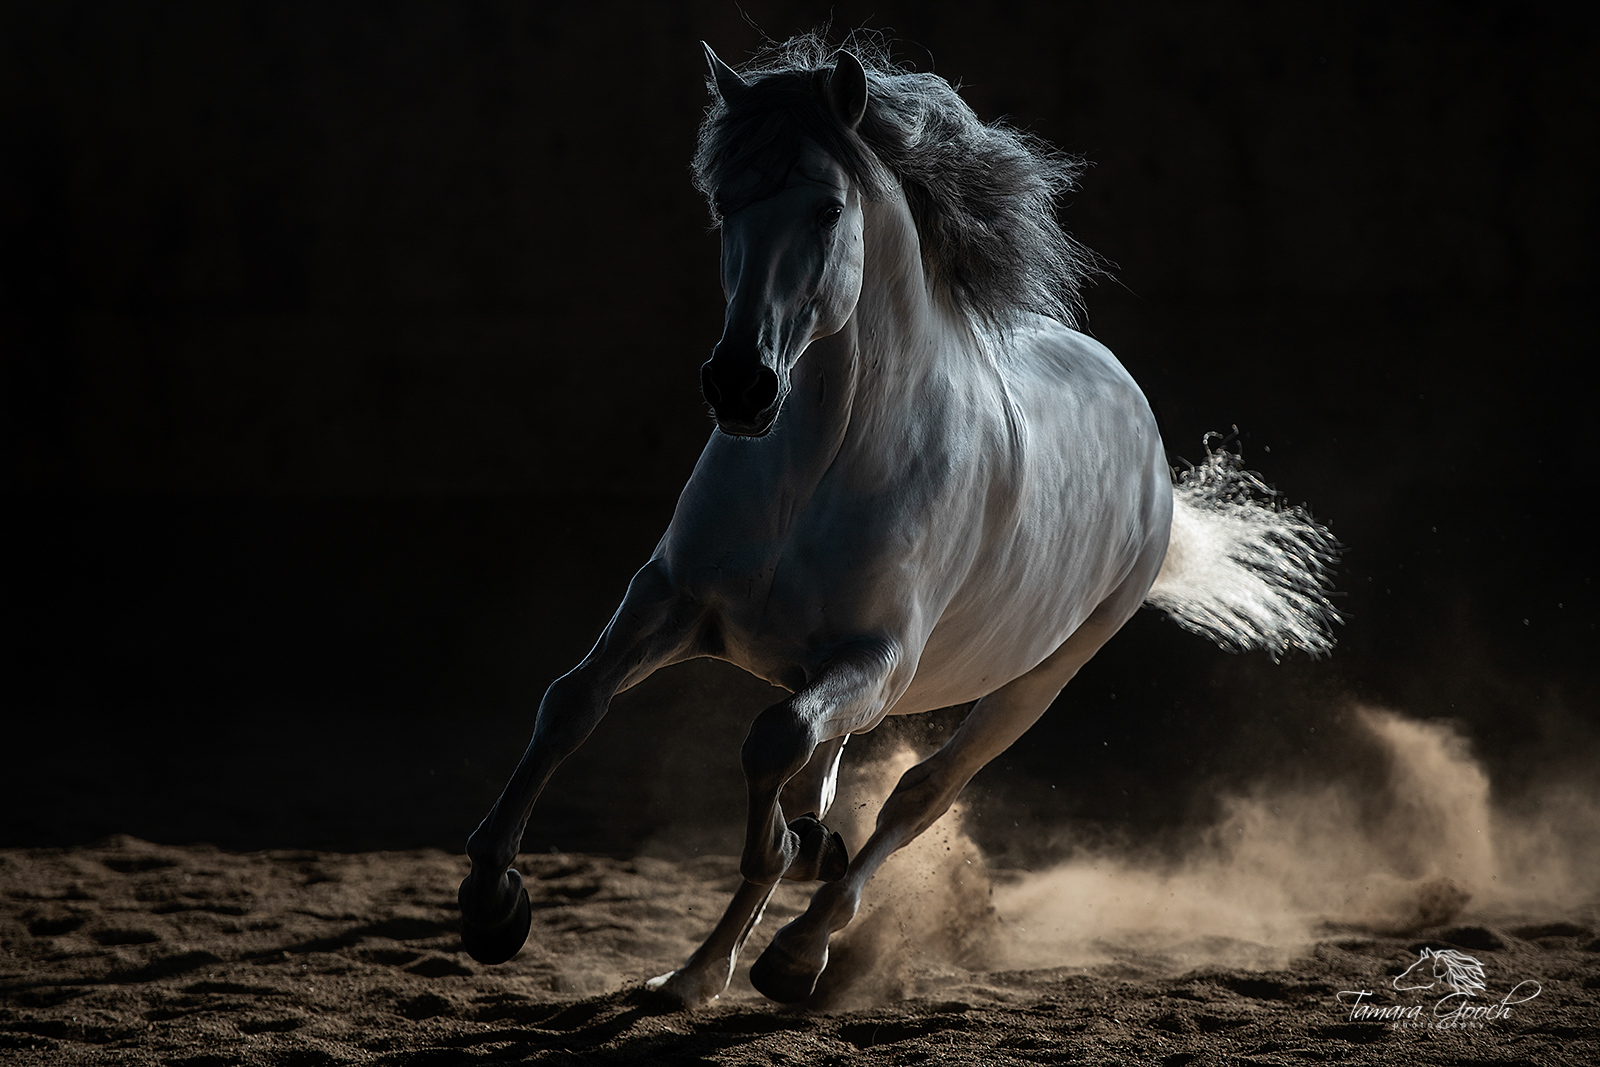 Andalusian horse at liberty in an indoor arena. Tamara Gooch Photography workhop Eugene Oregon.